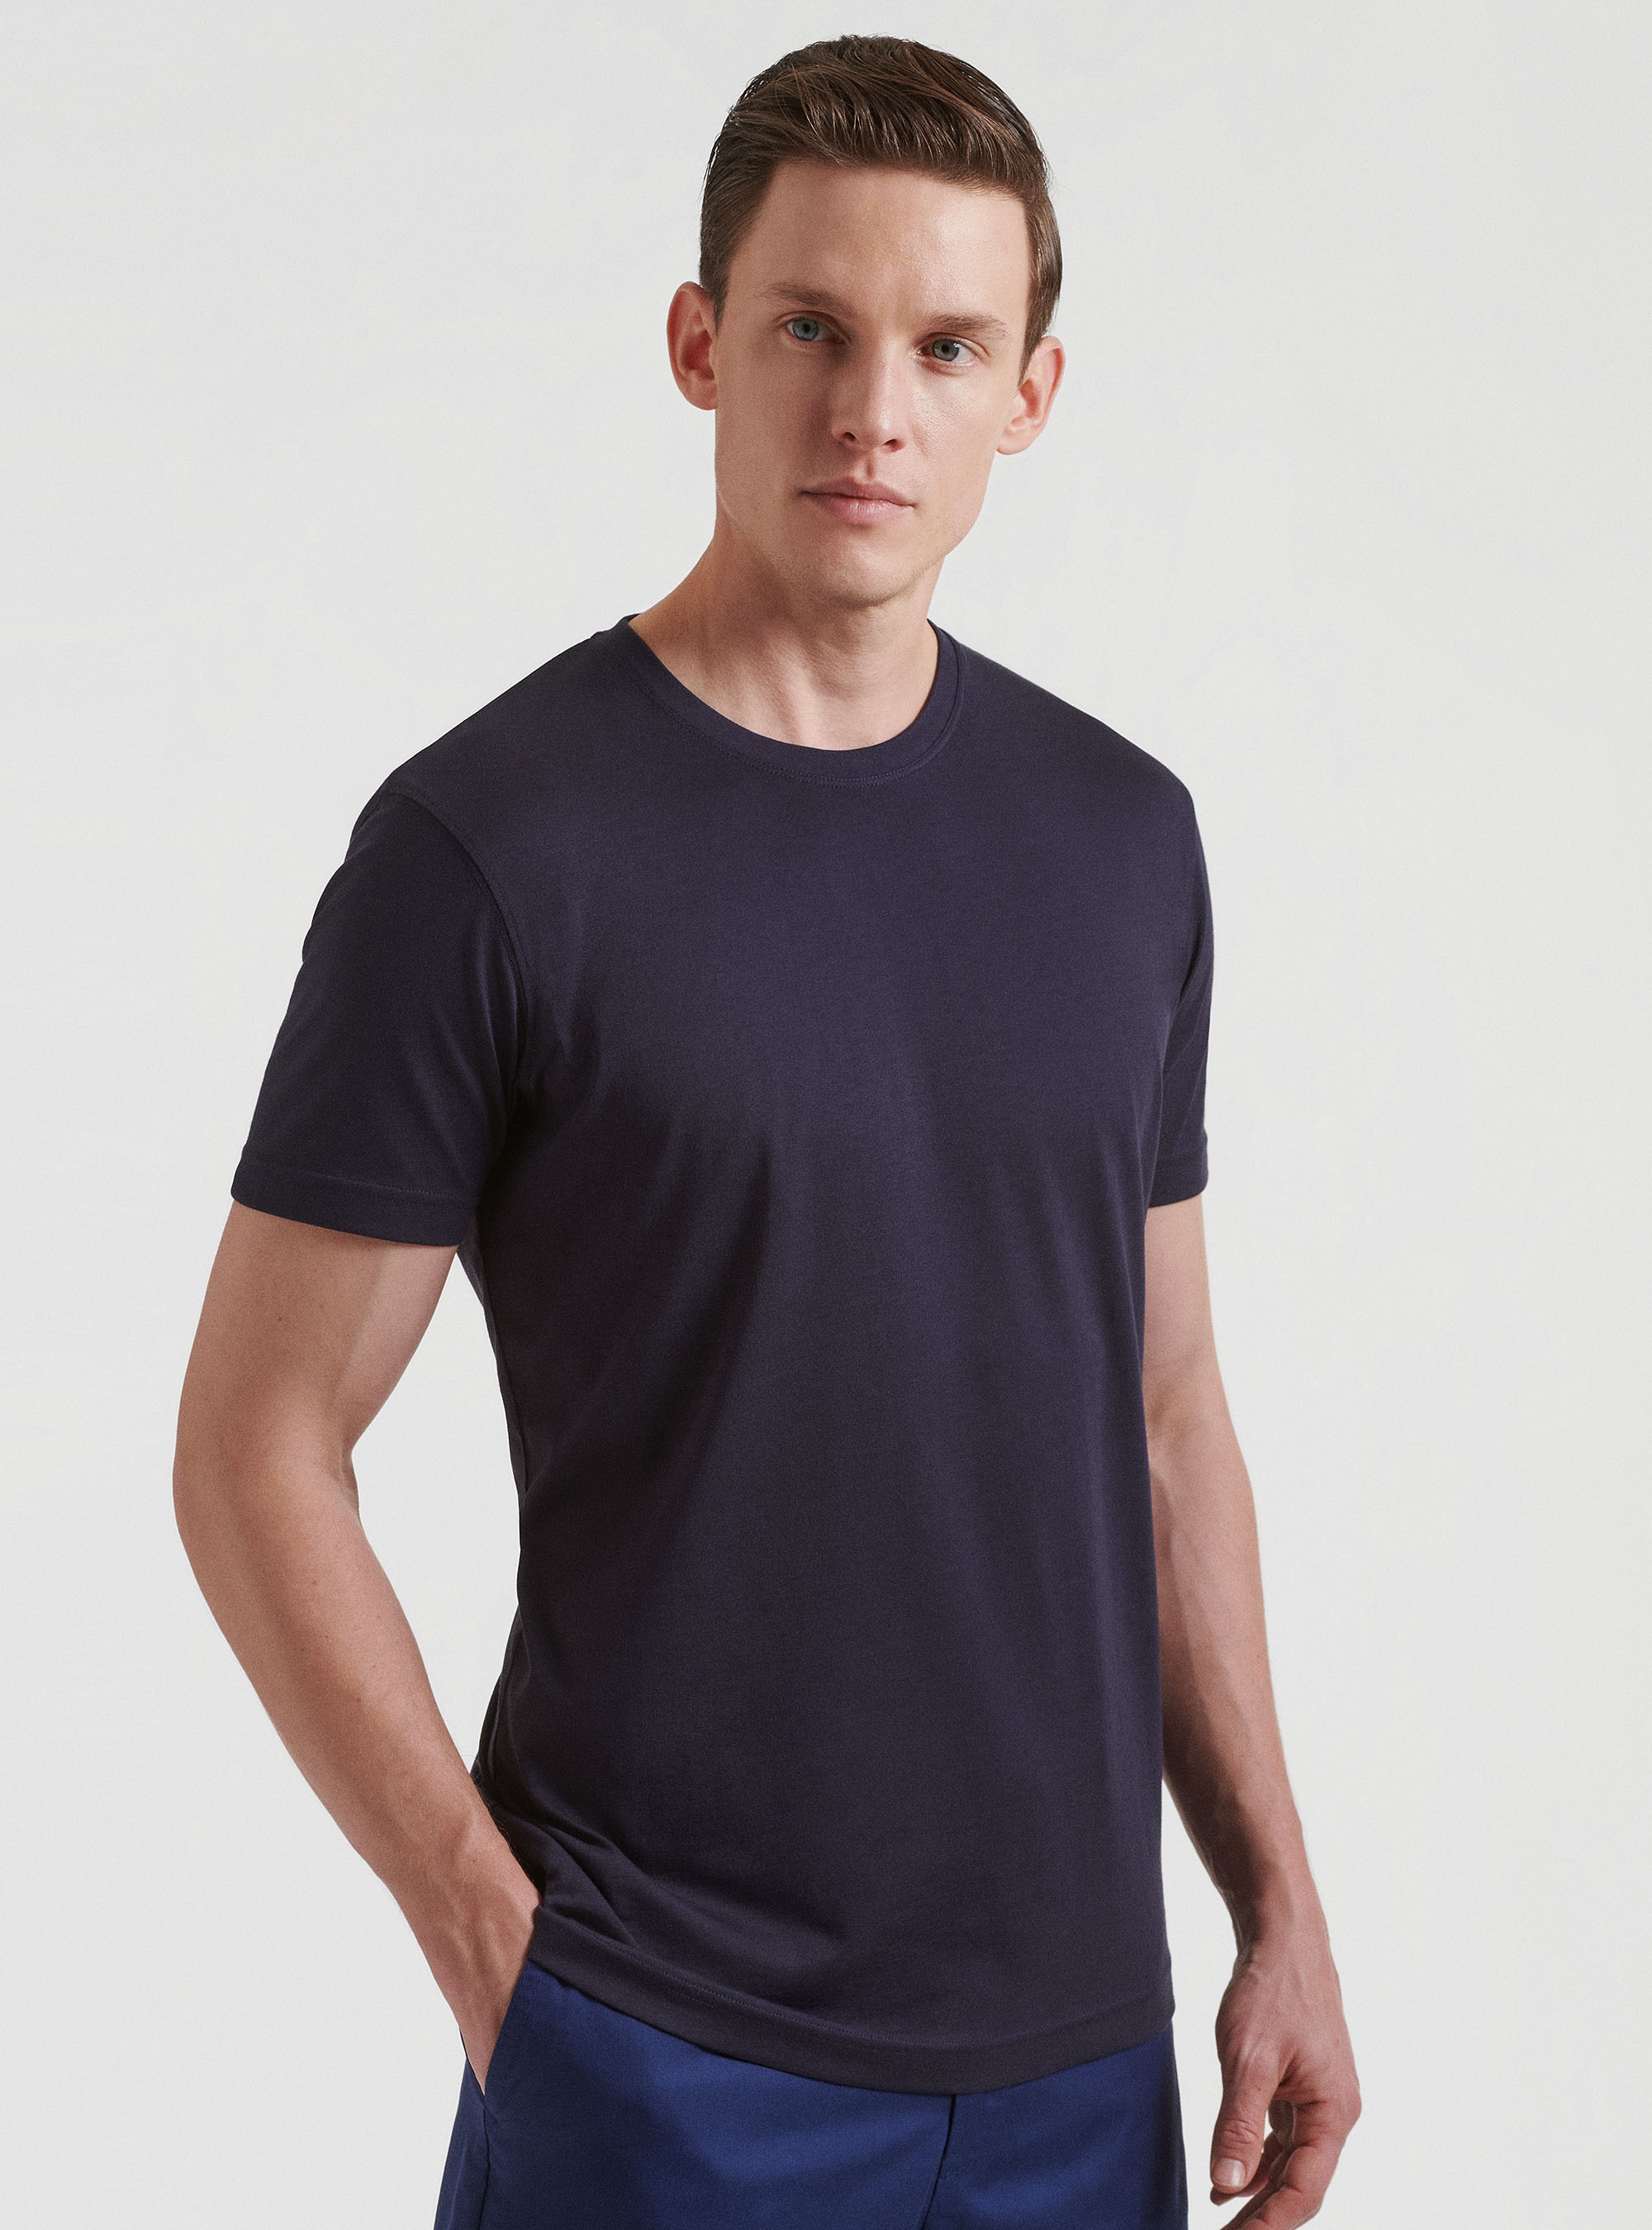 Supima cotton crew-neck | GutteridgeUS | T-shirt Uomo